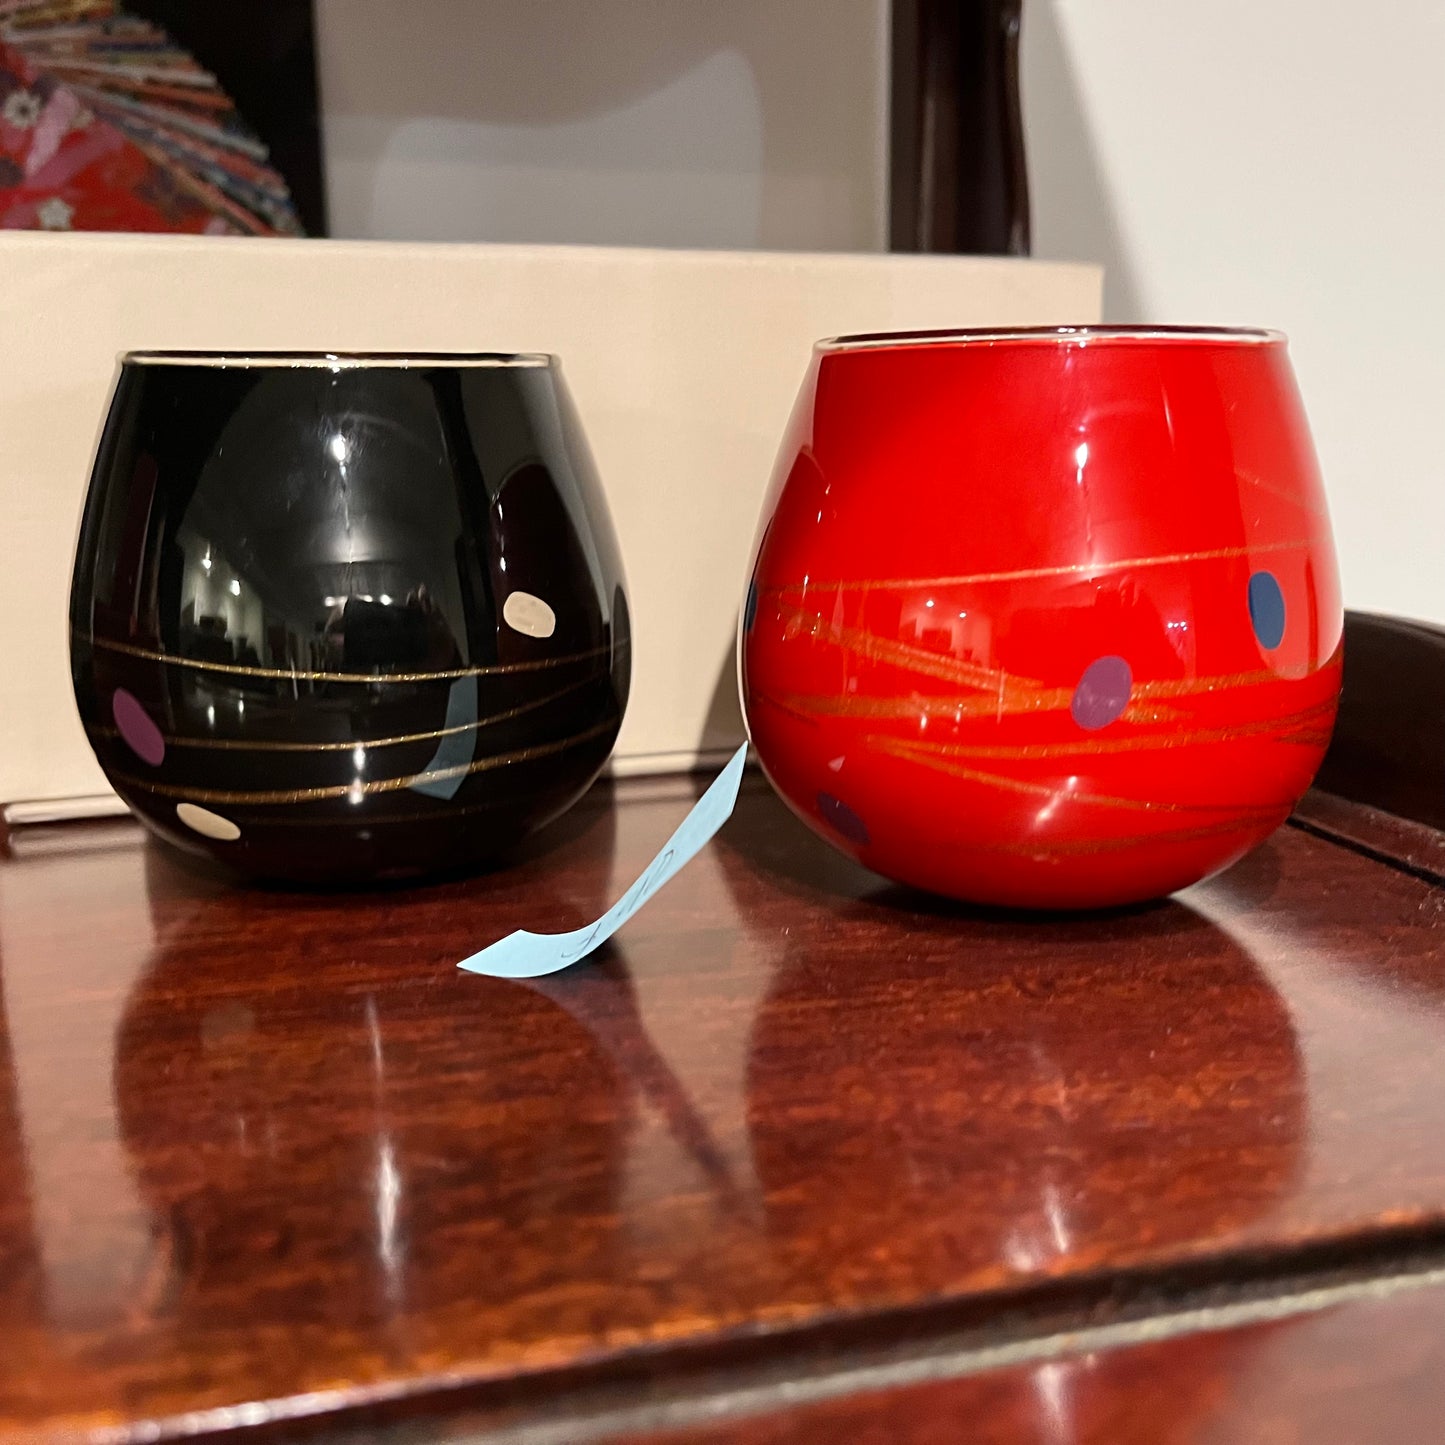 Pair of Japanese wine glasses